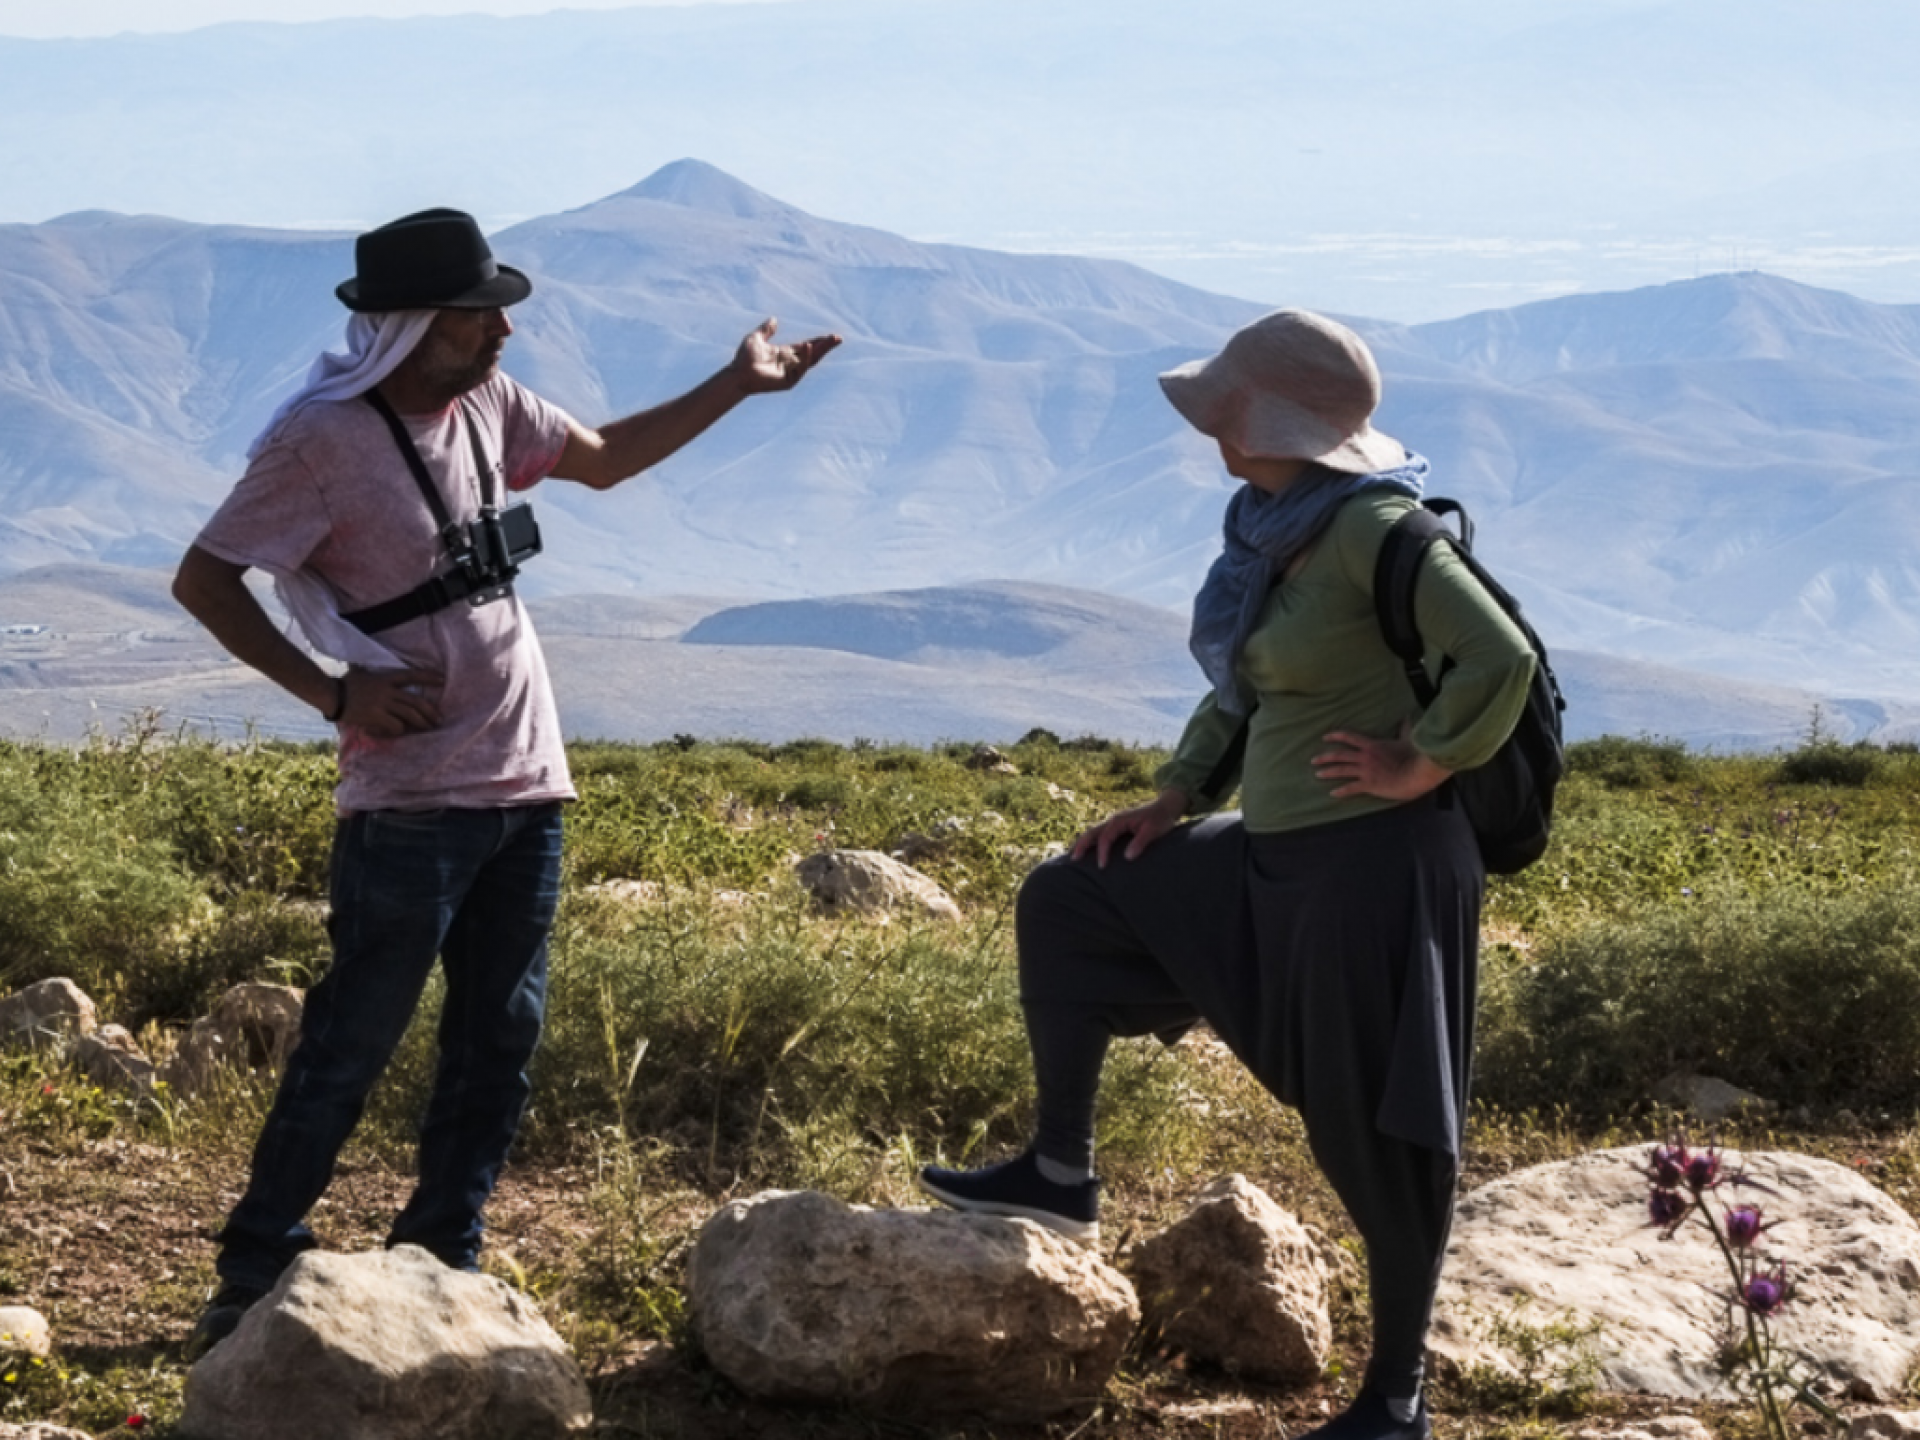 Jordan valley: Guy and Tamara, who accompanied the Palestinians herd,  enjoying the view